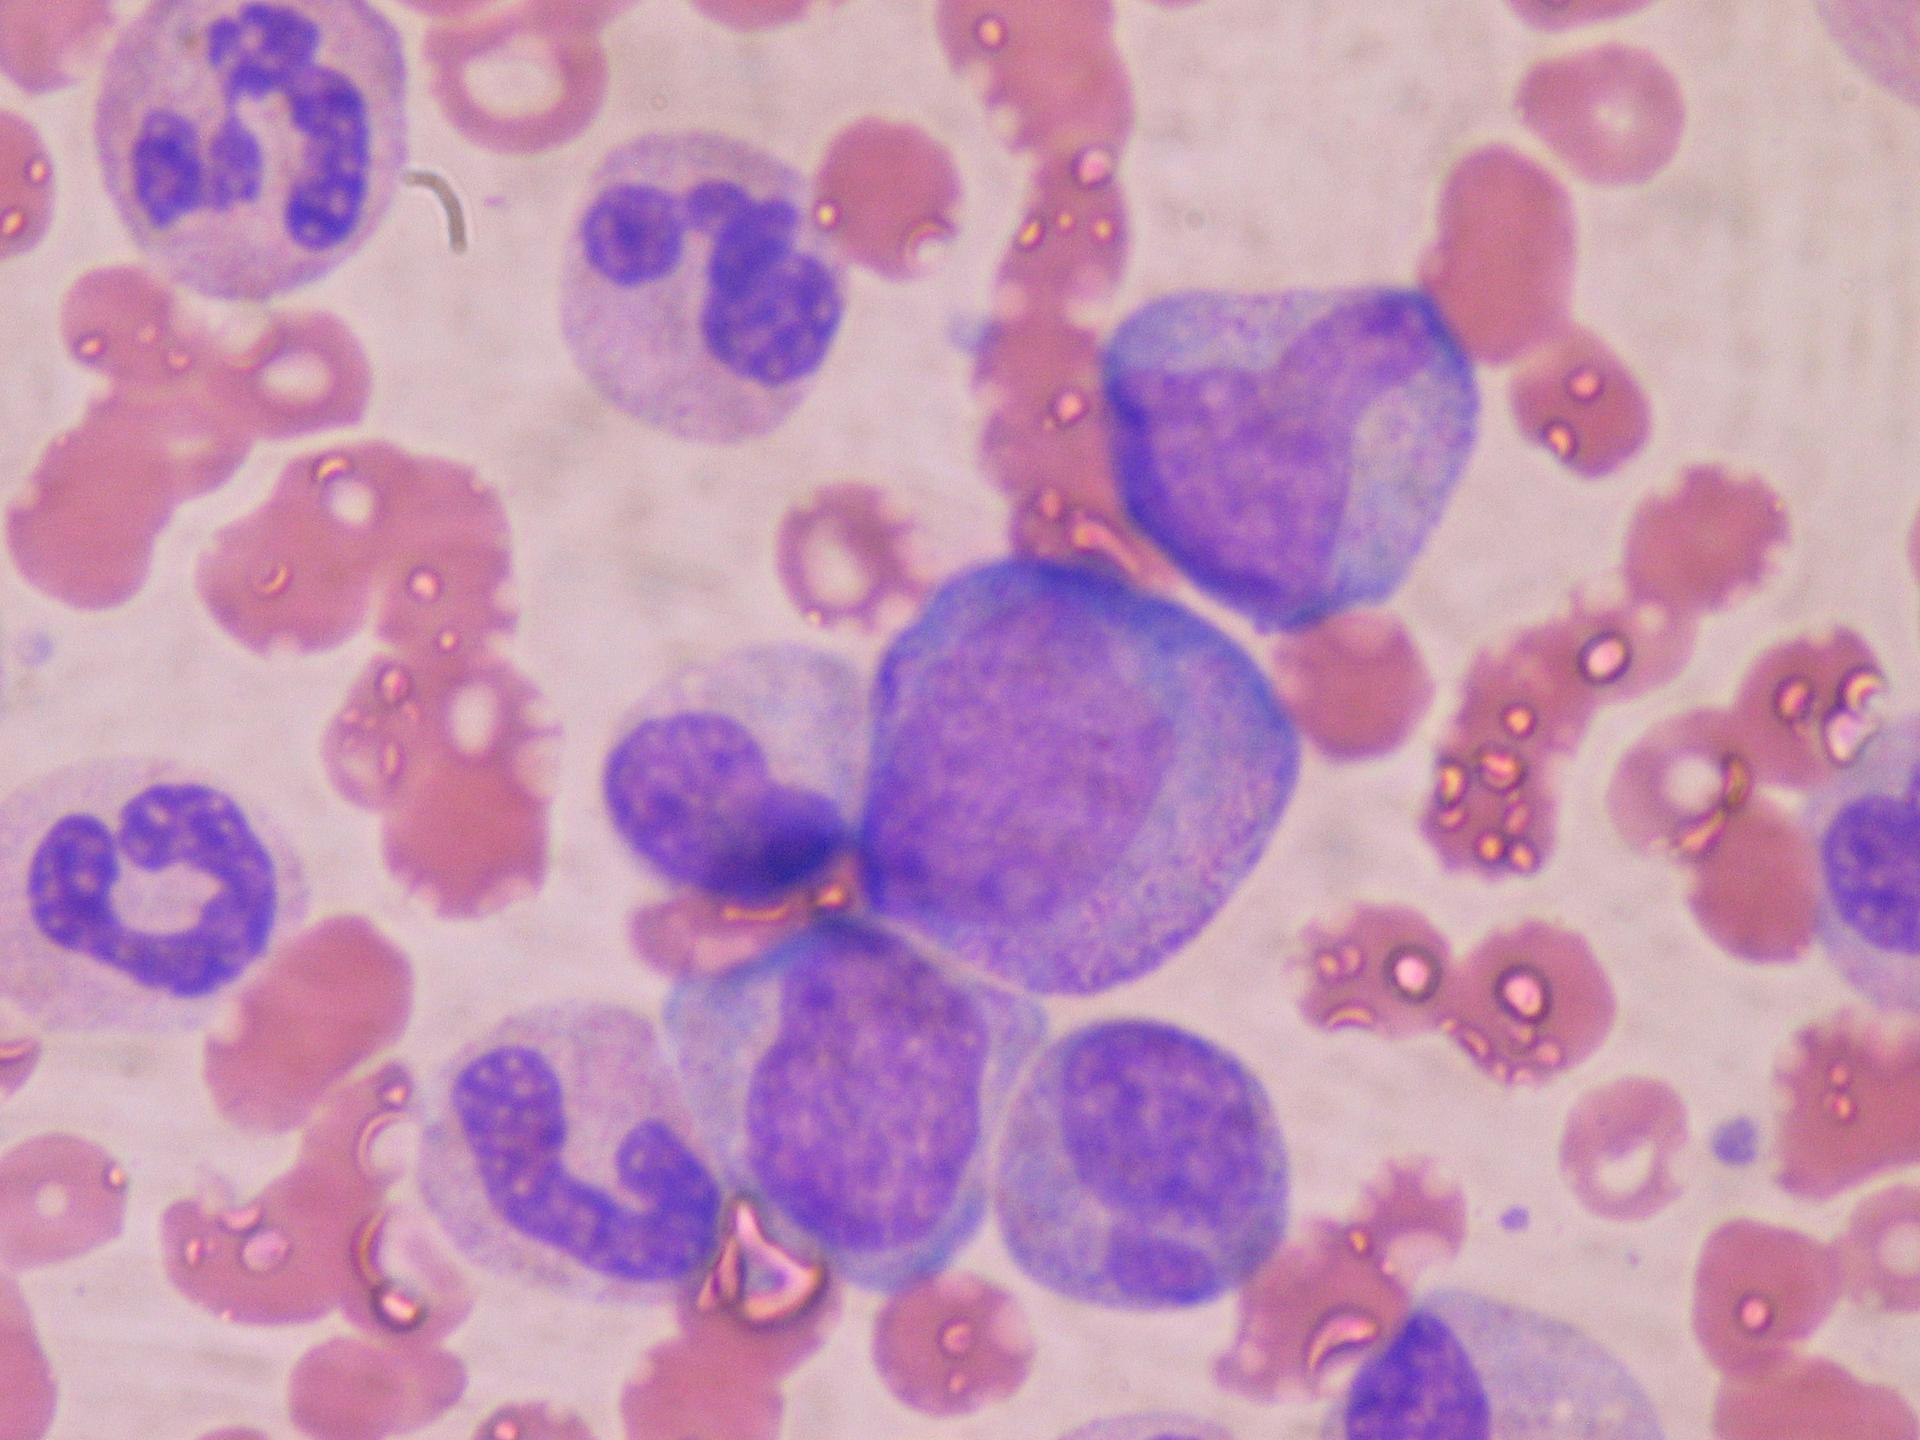 Hematopoietic blood cells